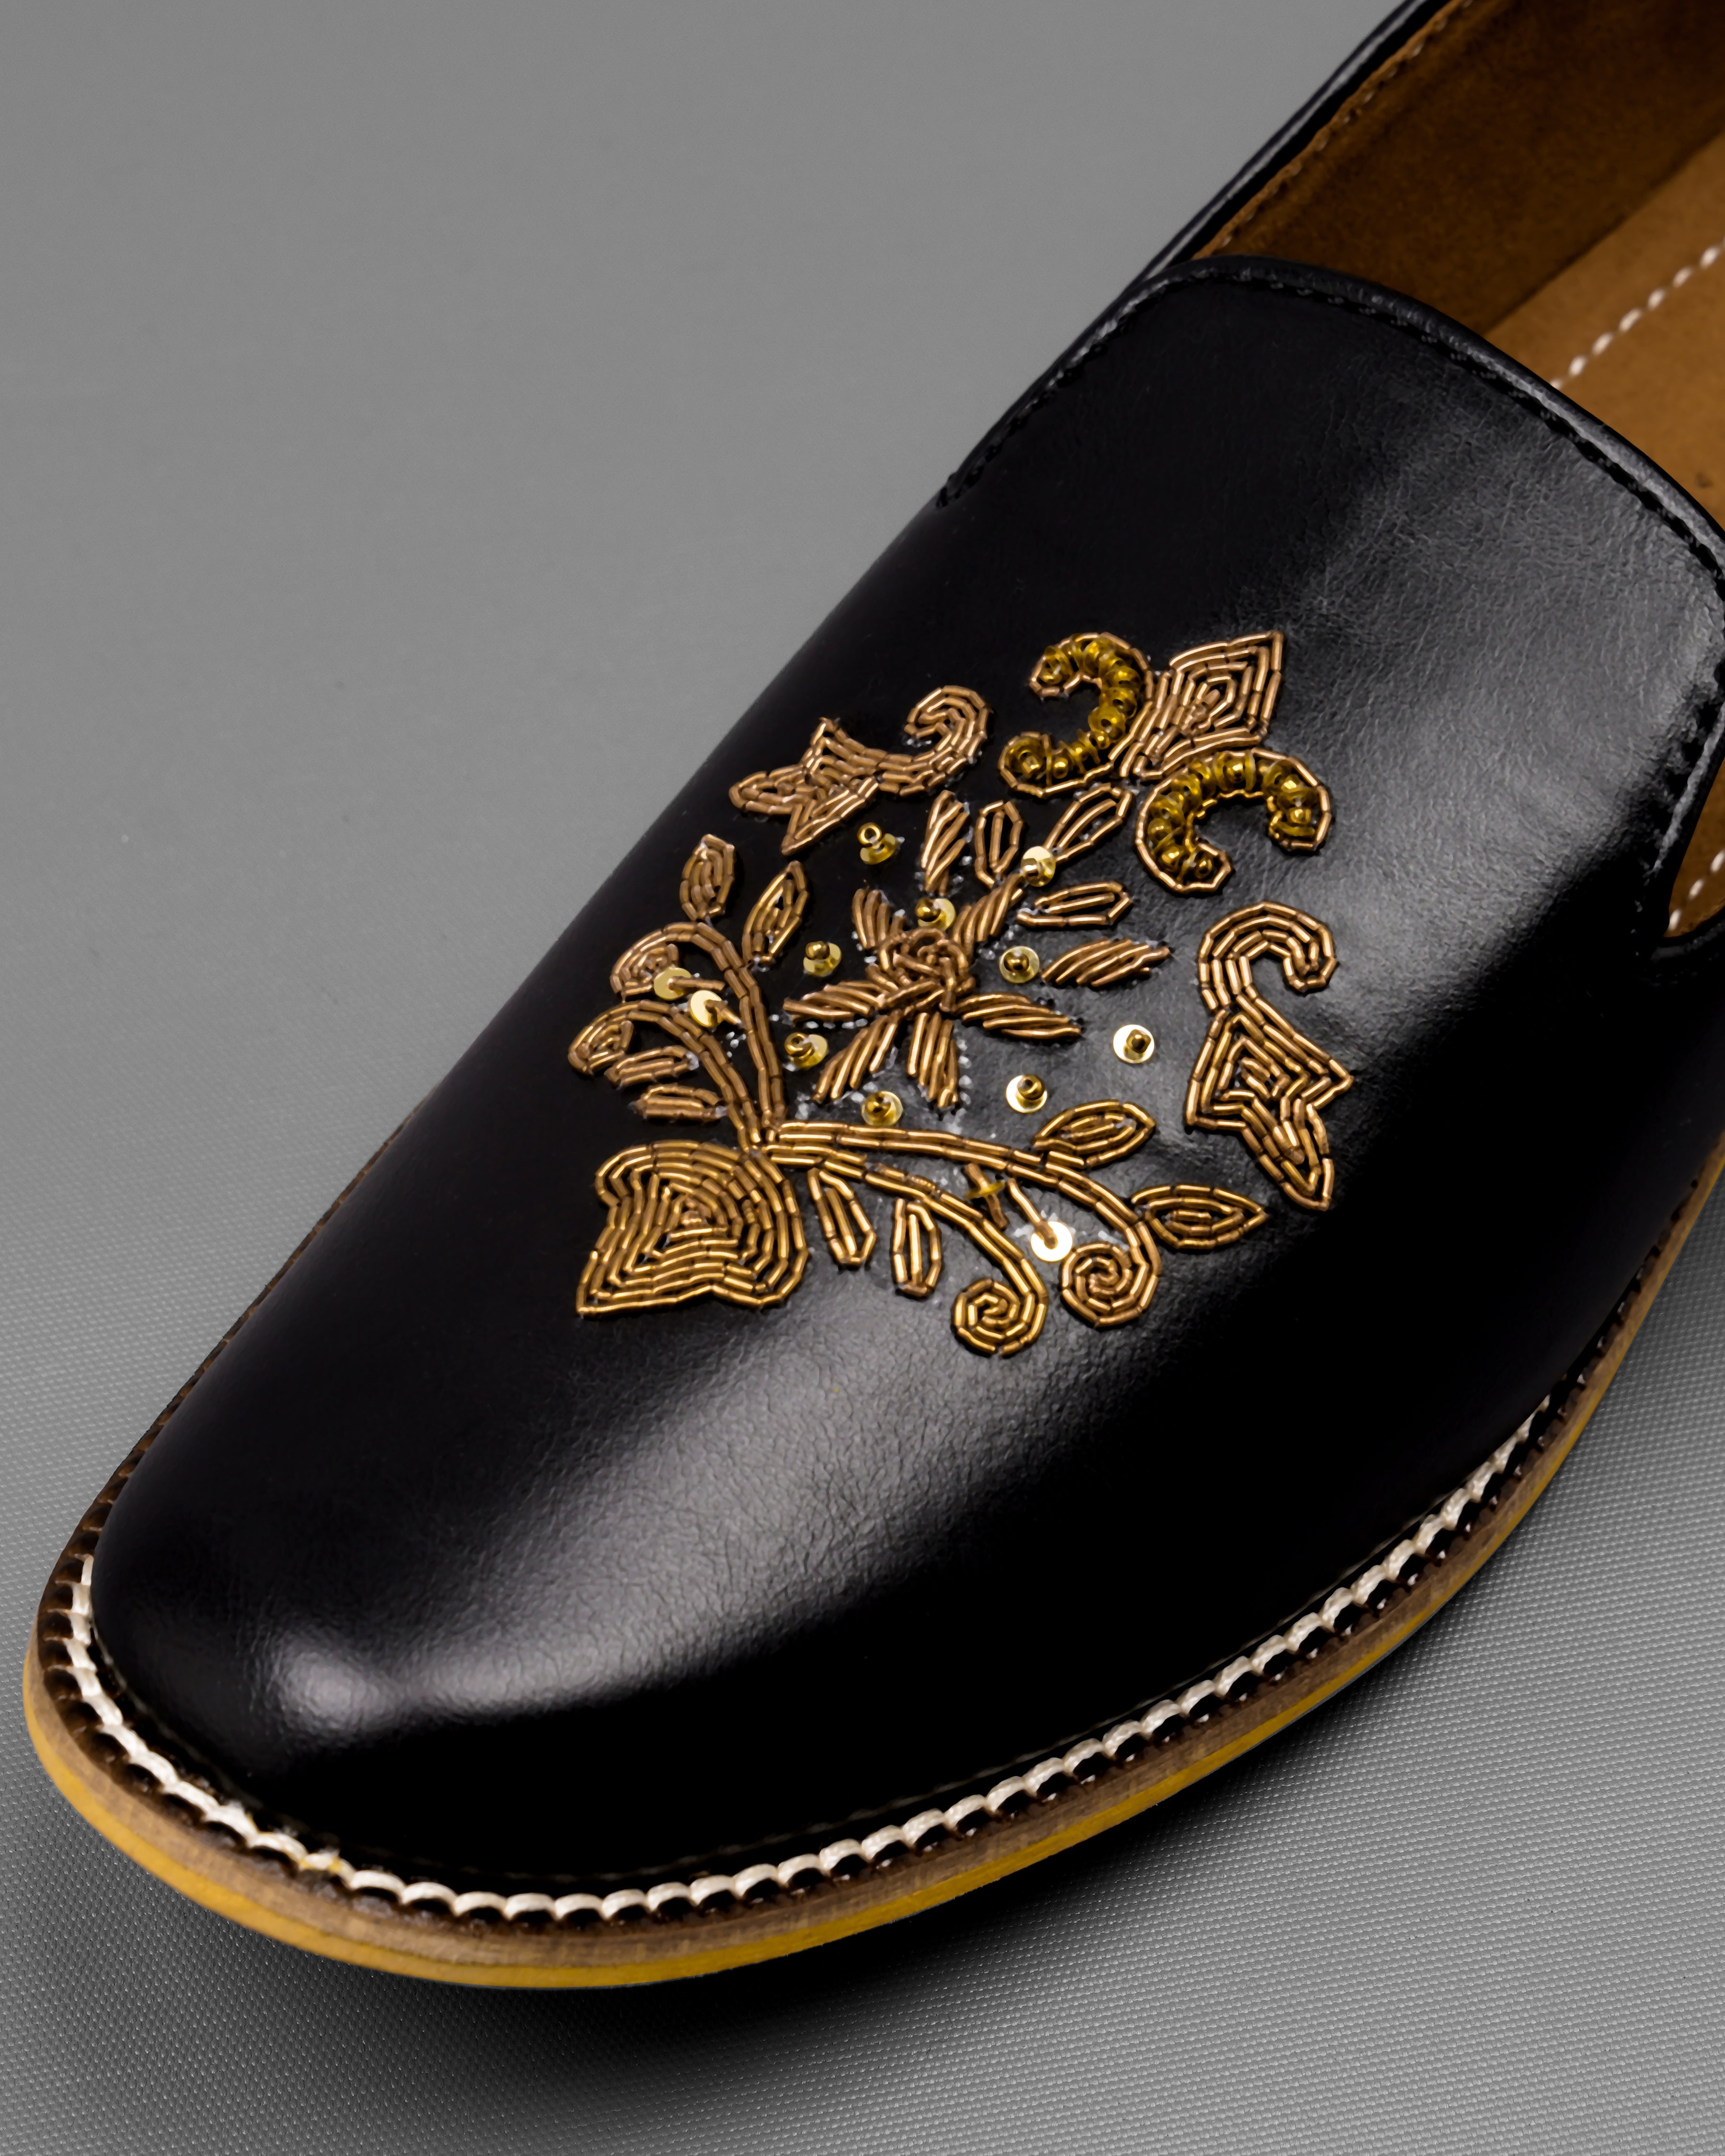 Jade Black Golden Zardosi Vegan Leather Hand stitched Slip-On Shoes FT103-6, FT103-7, FT103-8, FT103-9, FT103-10, FT103-11